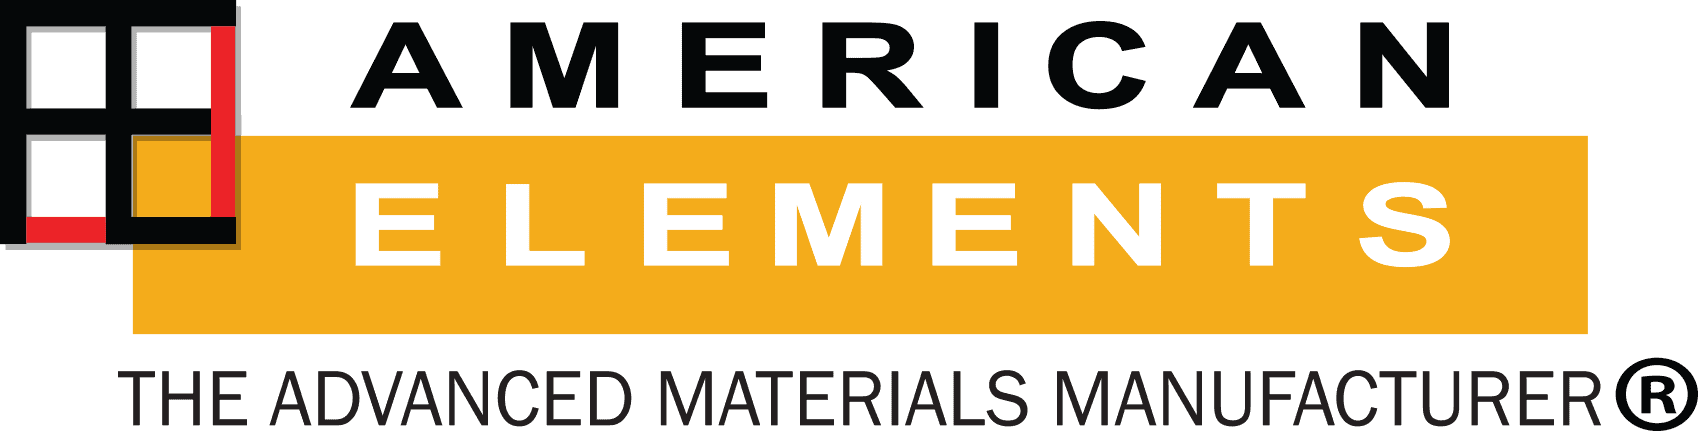 American Elements - 300dpi Logo